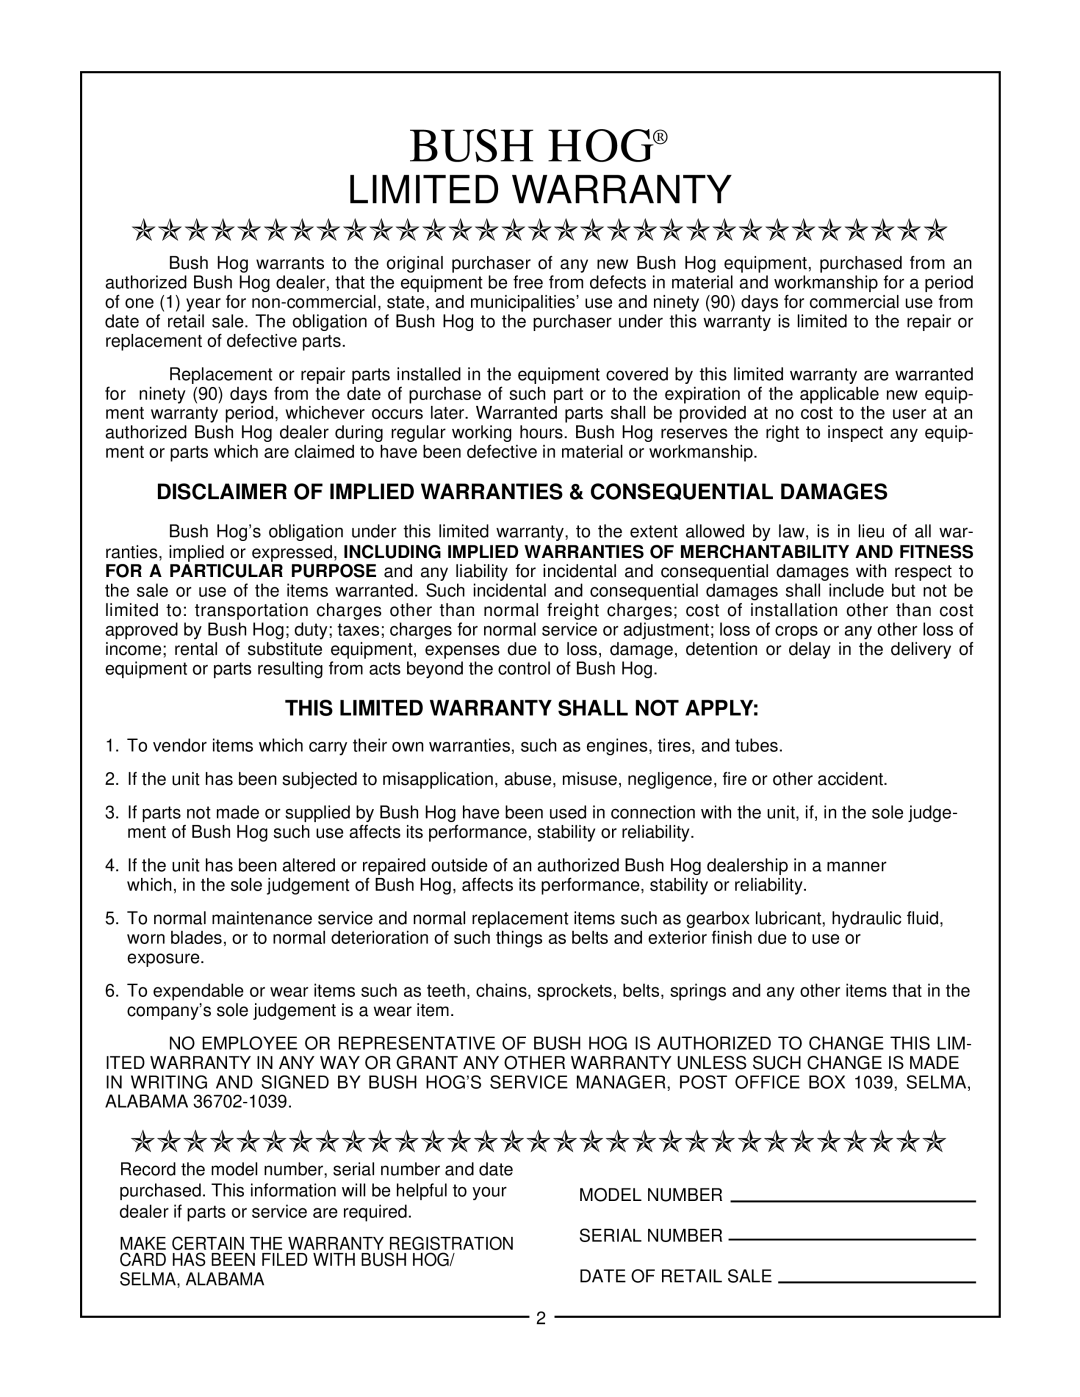 Bush Hog TD-1100 manual This Limited Warranty Shall Not Apply, Bush Hog 